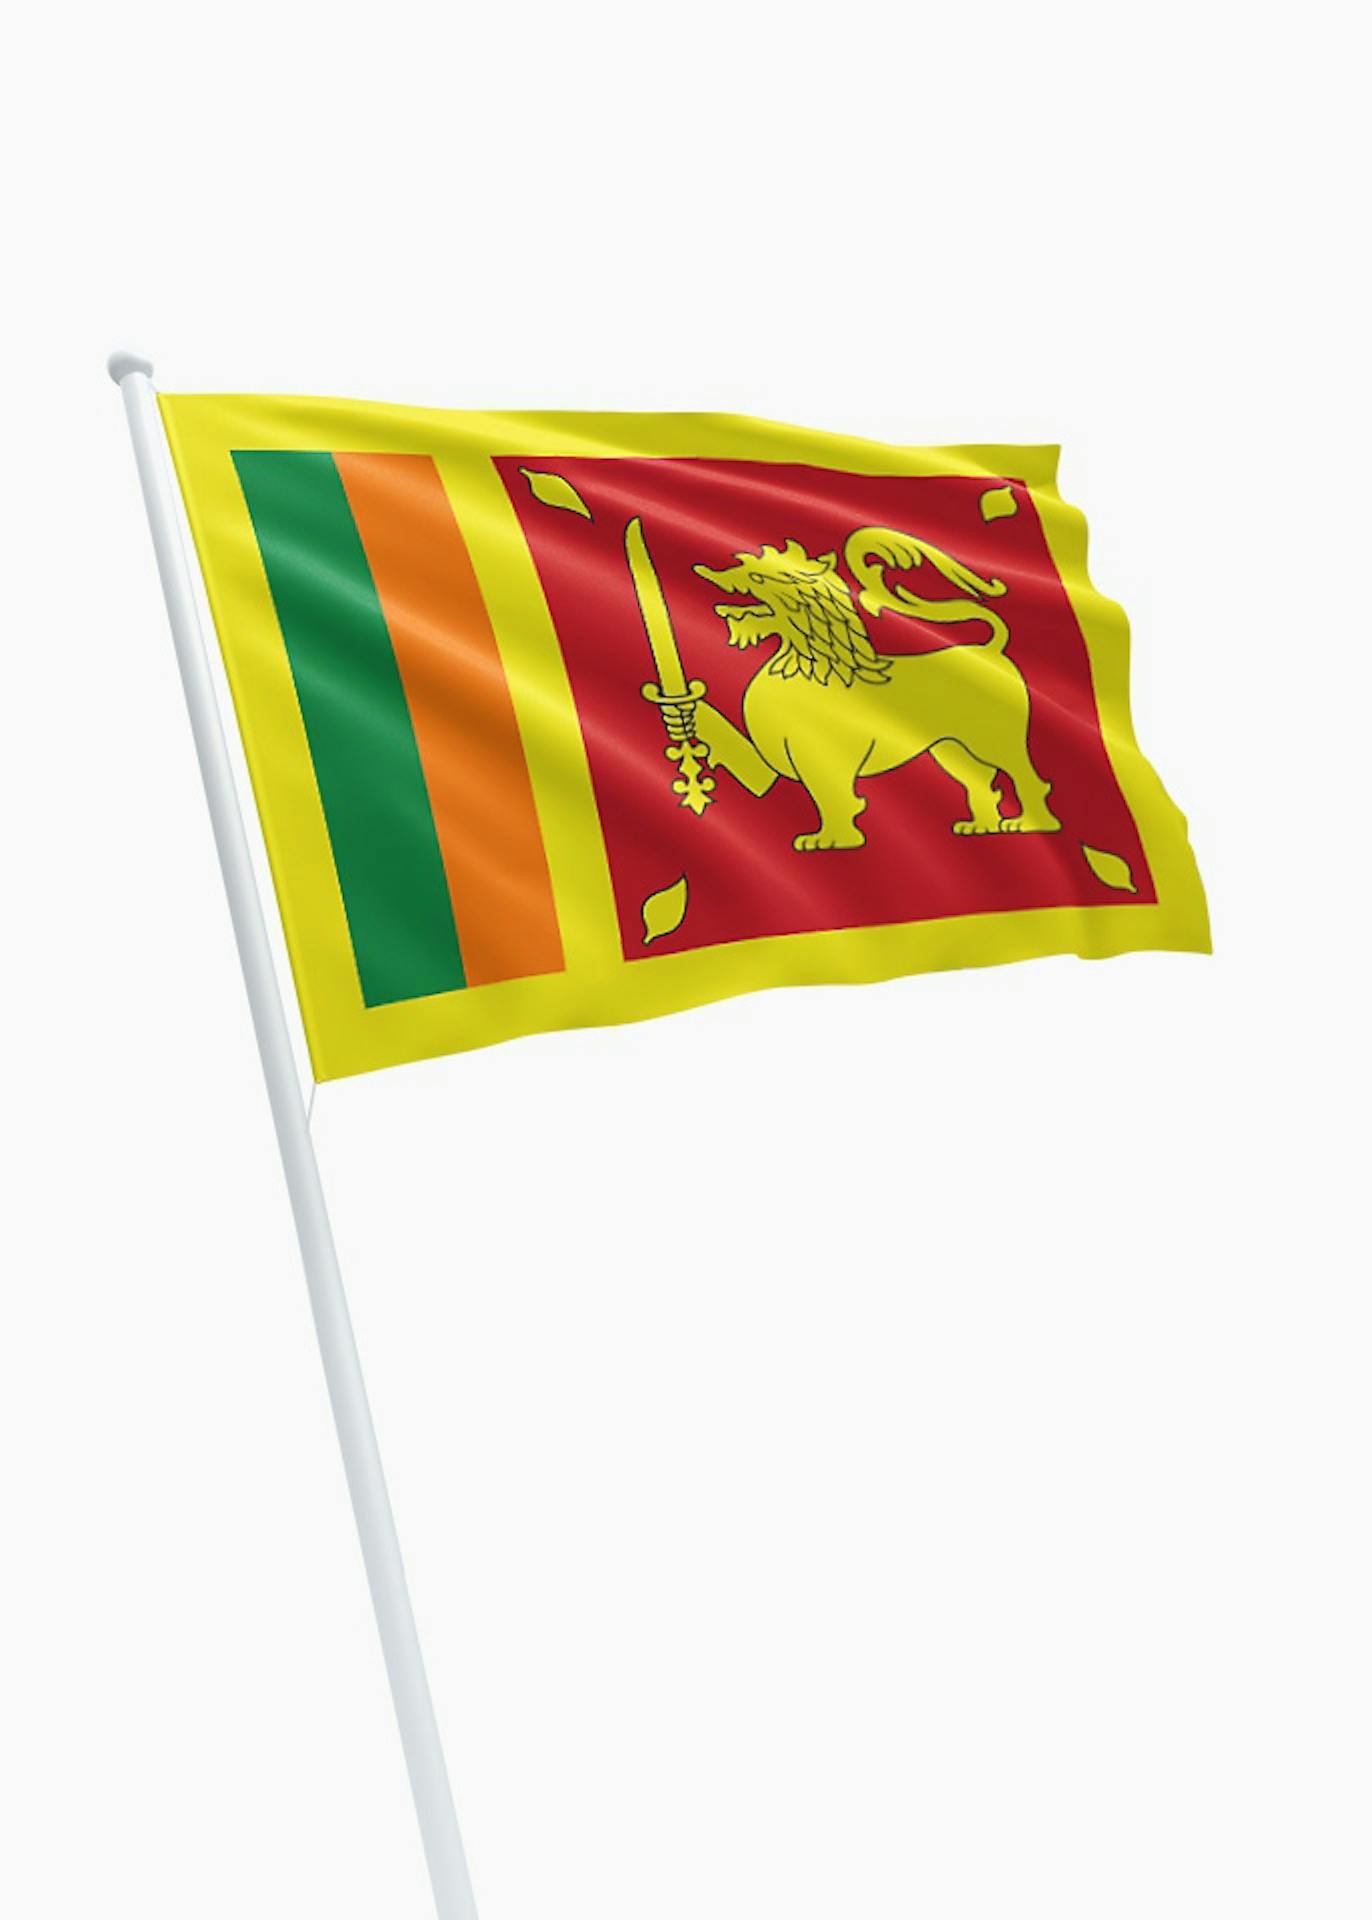 Aardewerk George Hanbury Verdragen Sri Lankaanse vlag kopen? Dé specialist in vlaggen! - DVC